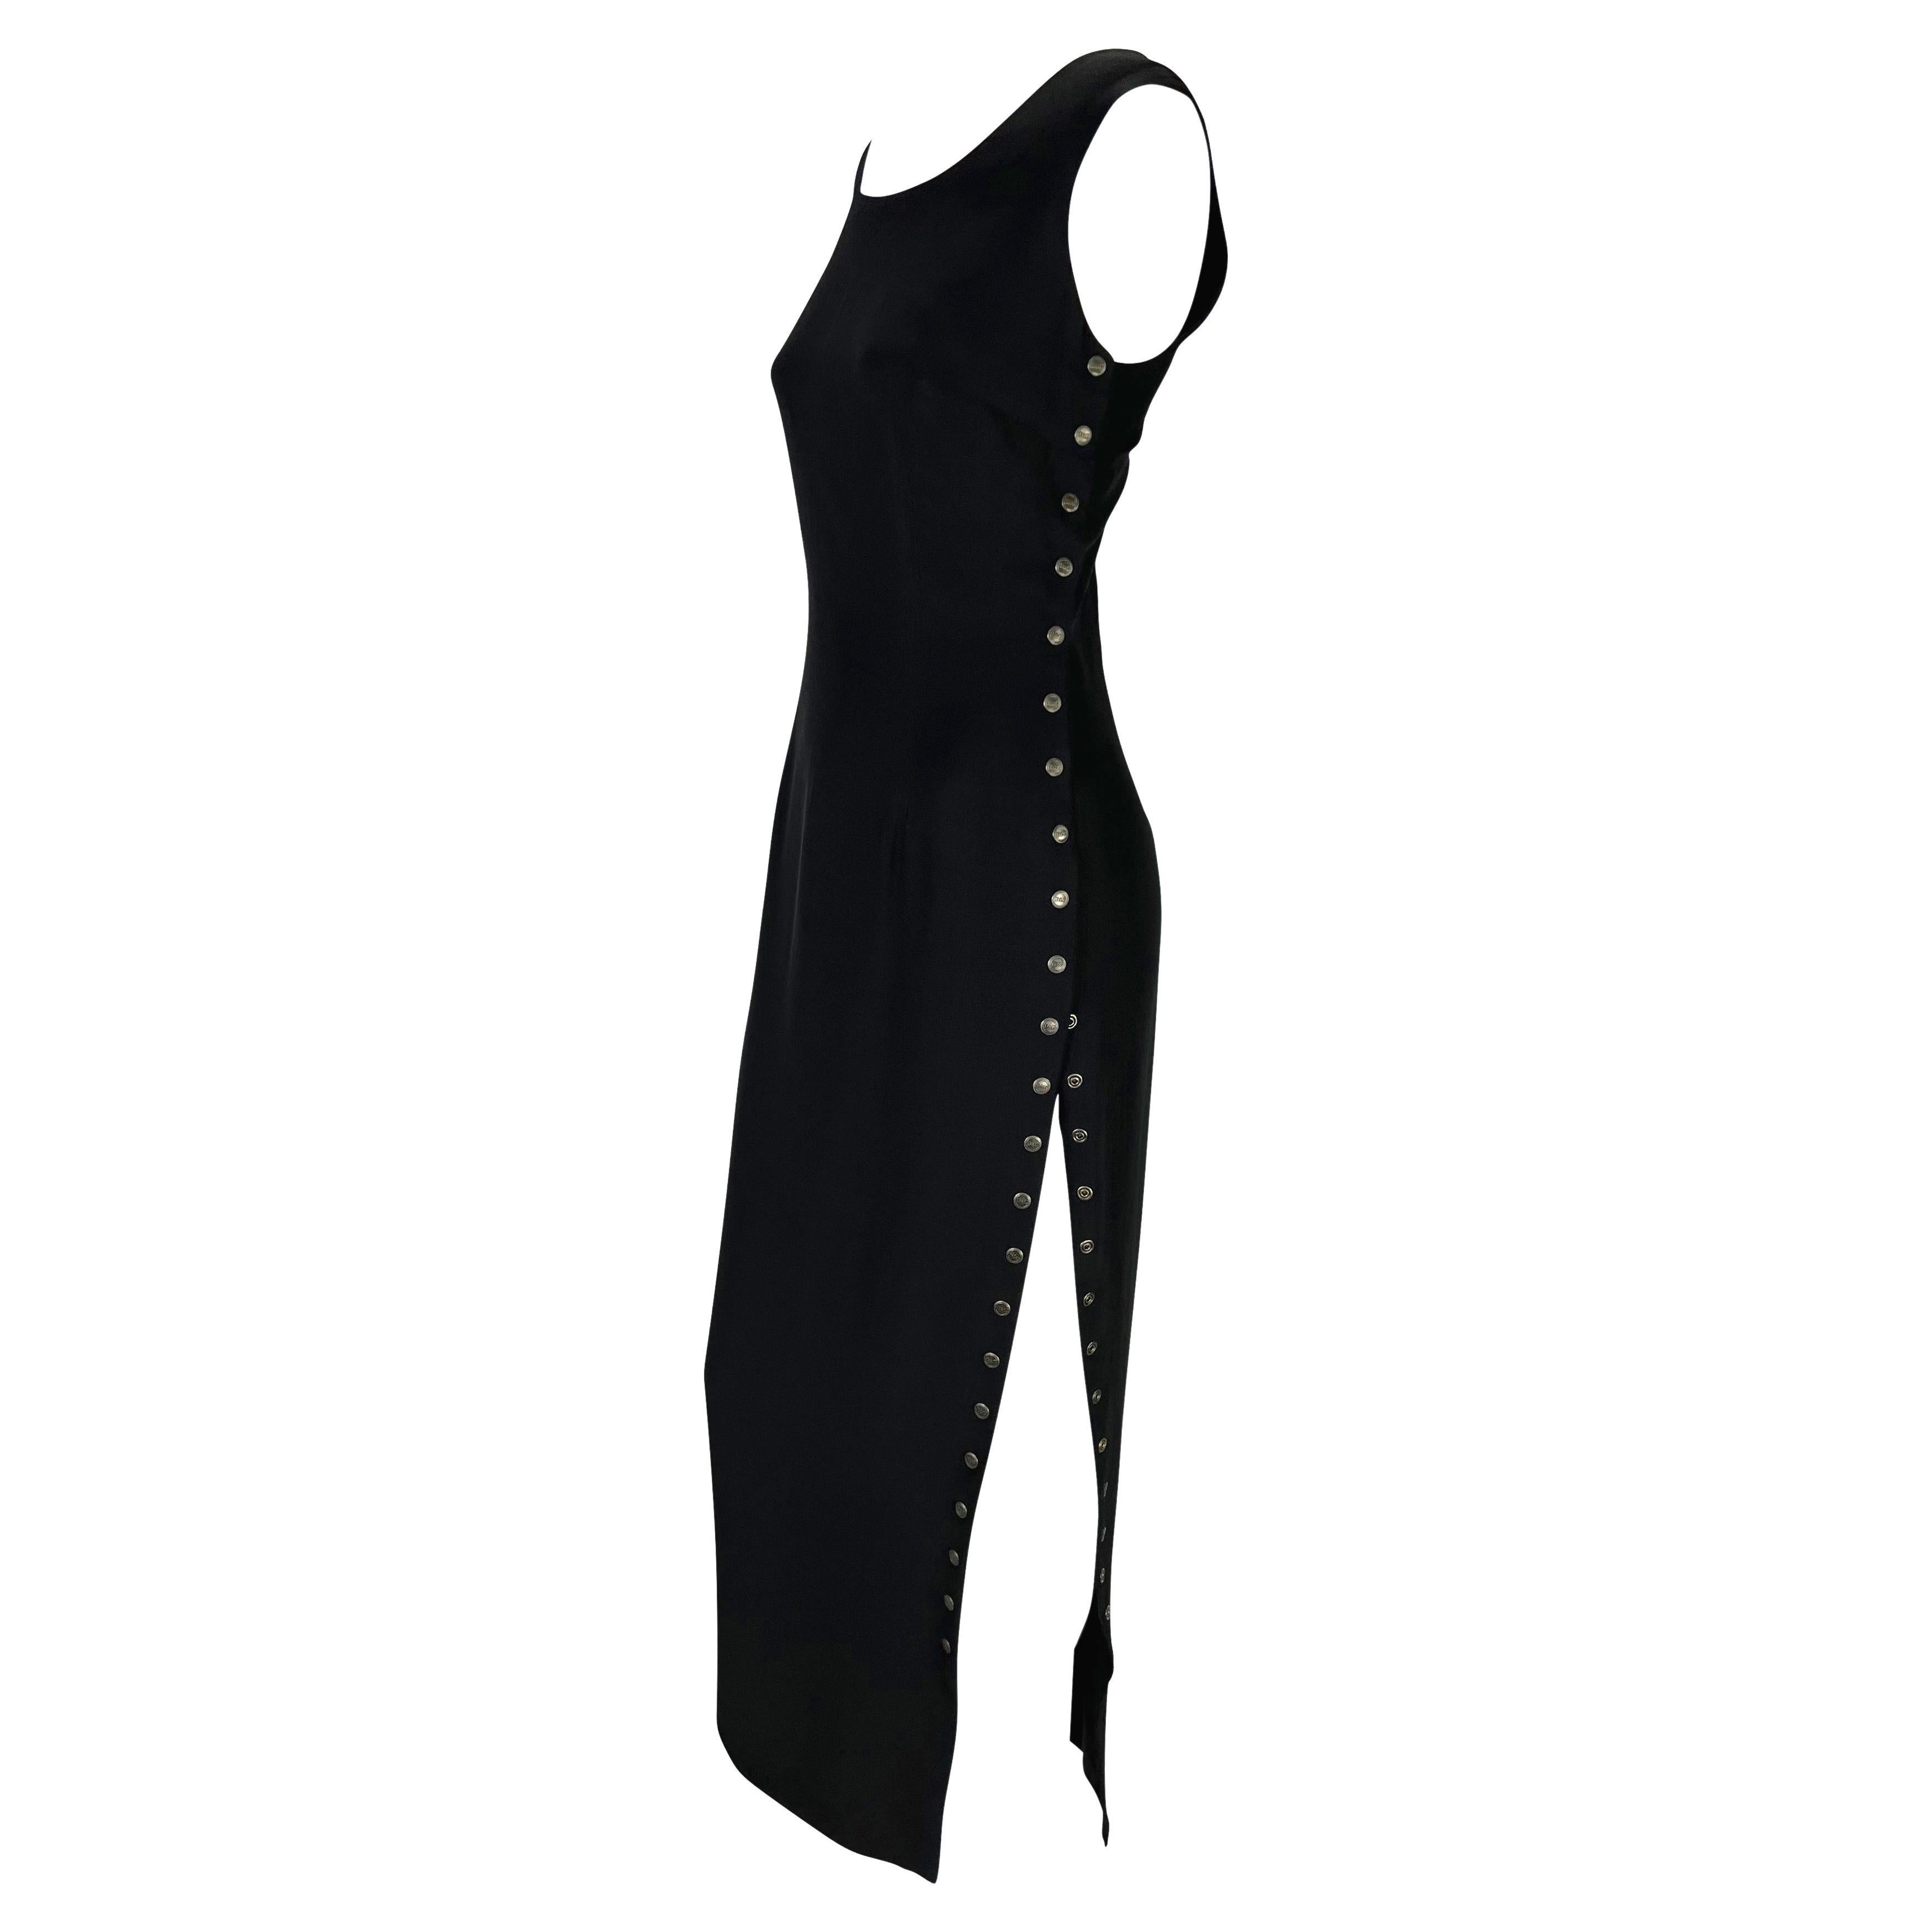 S/S 1993 Dolce & Gabbana Runway Logo Snap Black Bodycon Pin-Up Dress For Sale